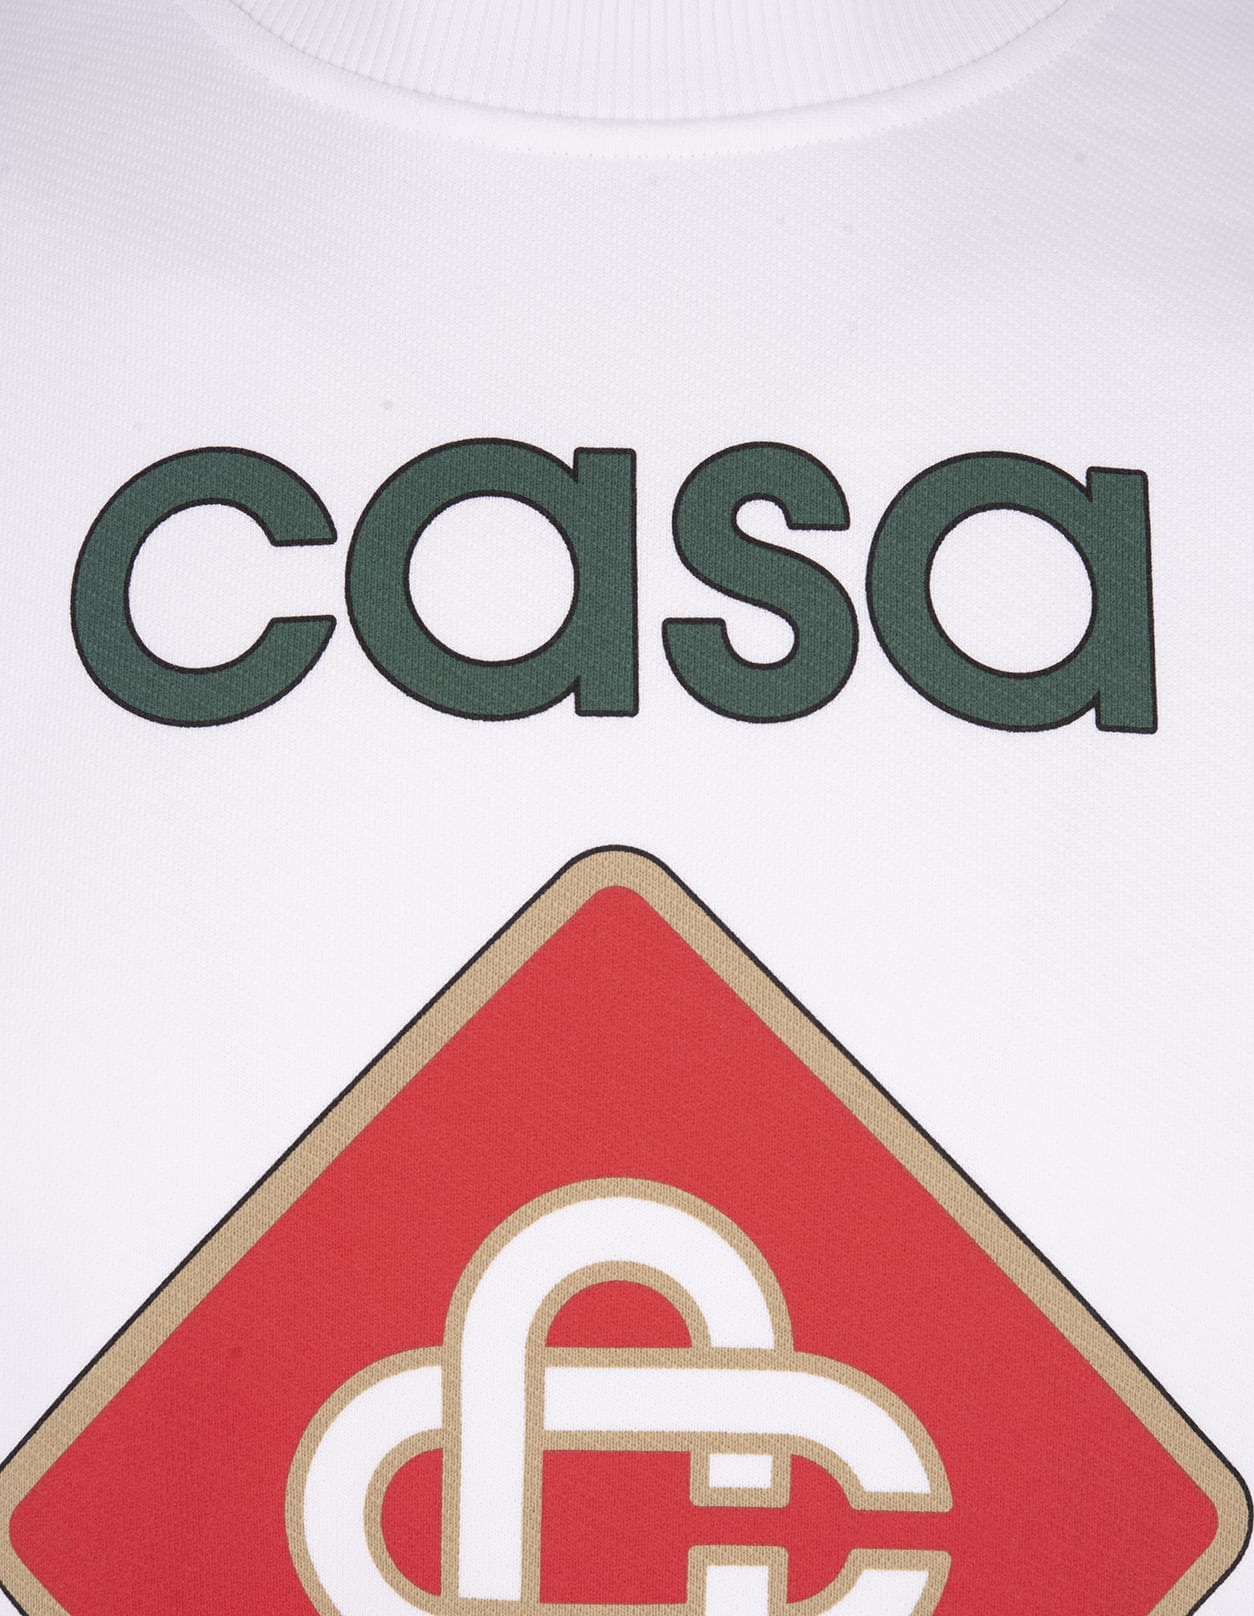 Shop Casablanca White Casa Sport Crew Neck Sweatshirt